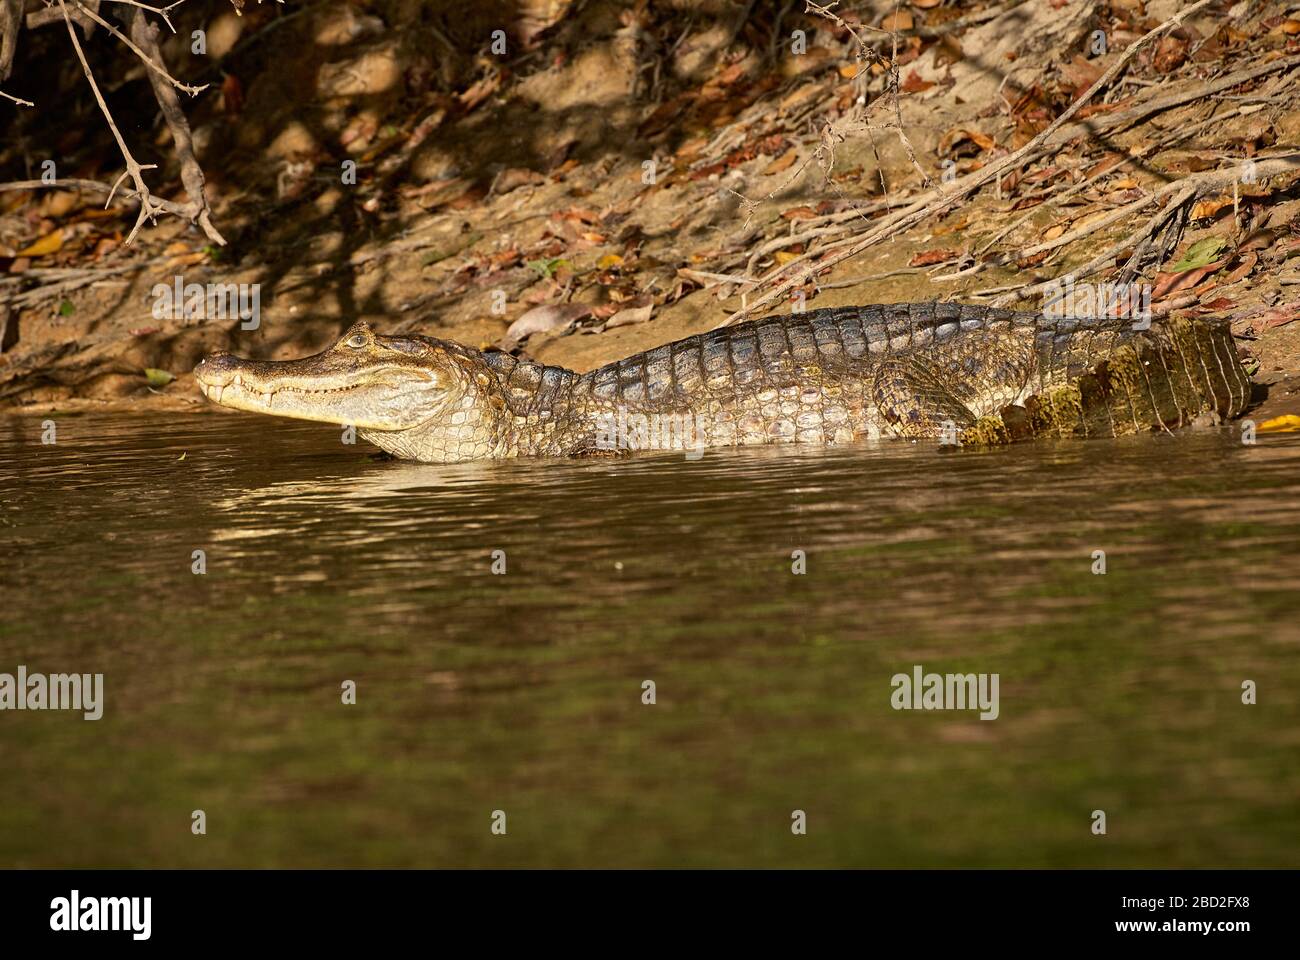 Common caiman lying in the sun, Caiman crocodilus, LLANOS, Venezuela, South America, America Stock Photo